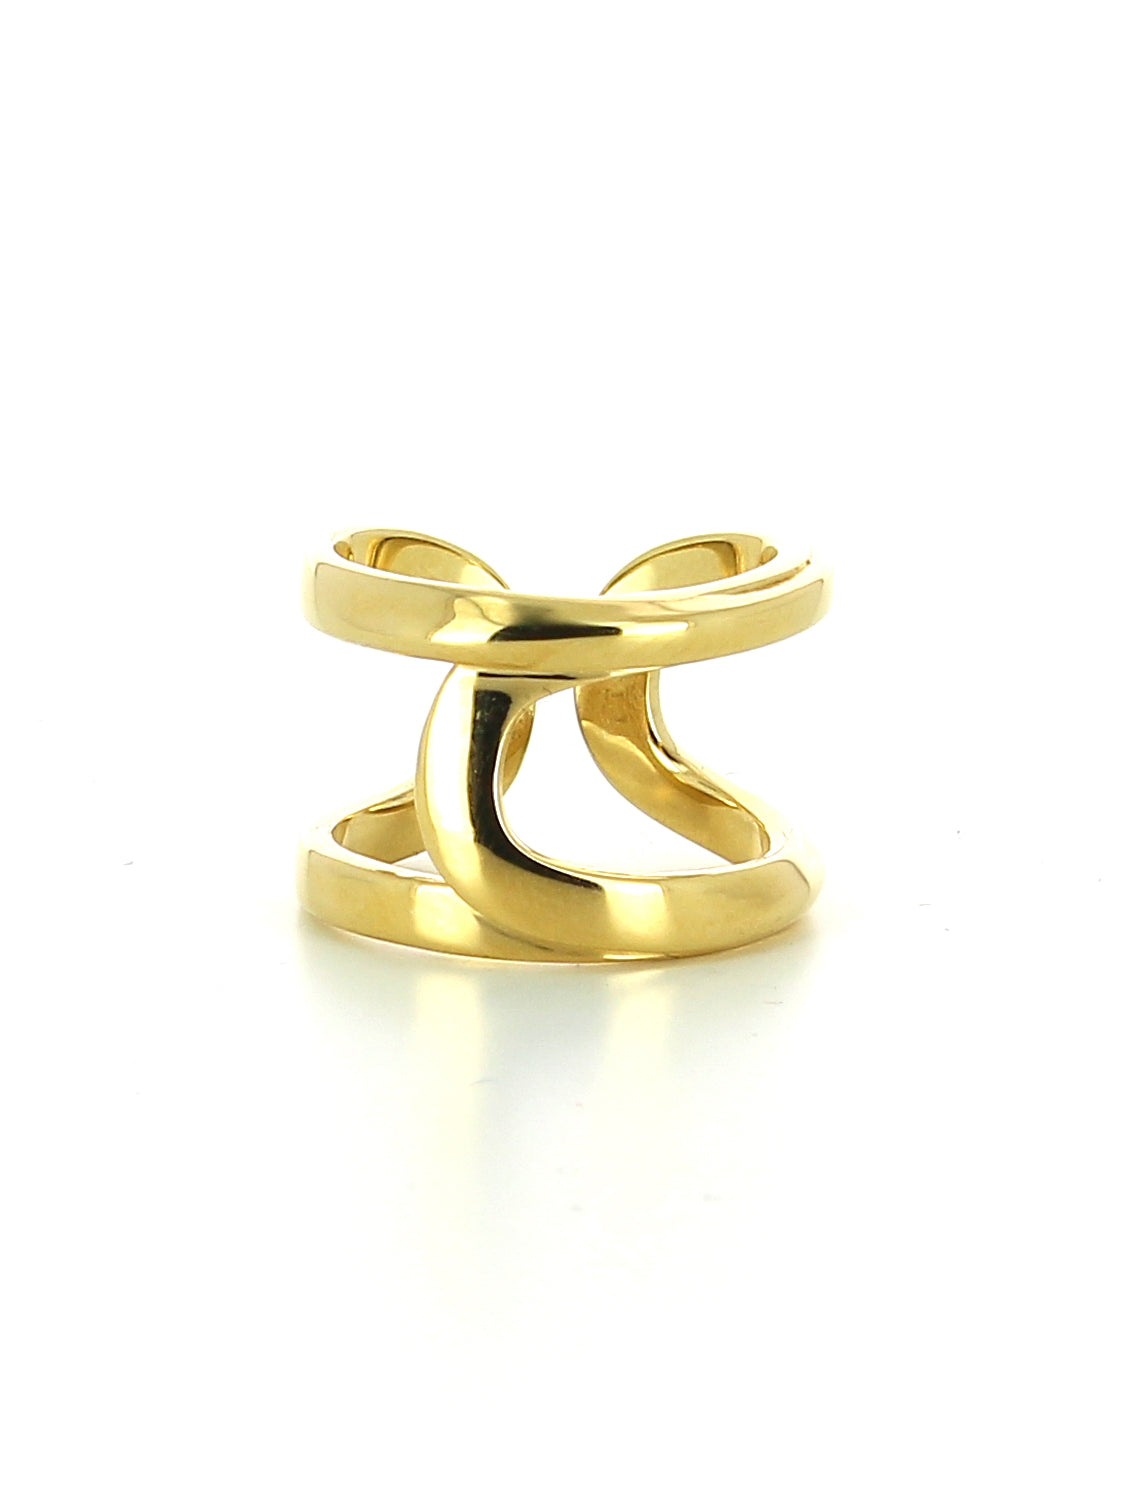 〔Philippe Audibert〕Sef ring / GOLD